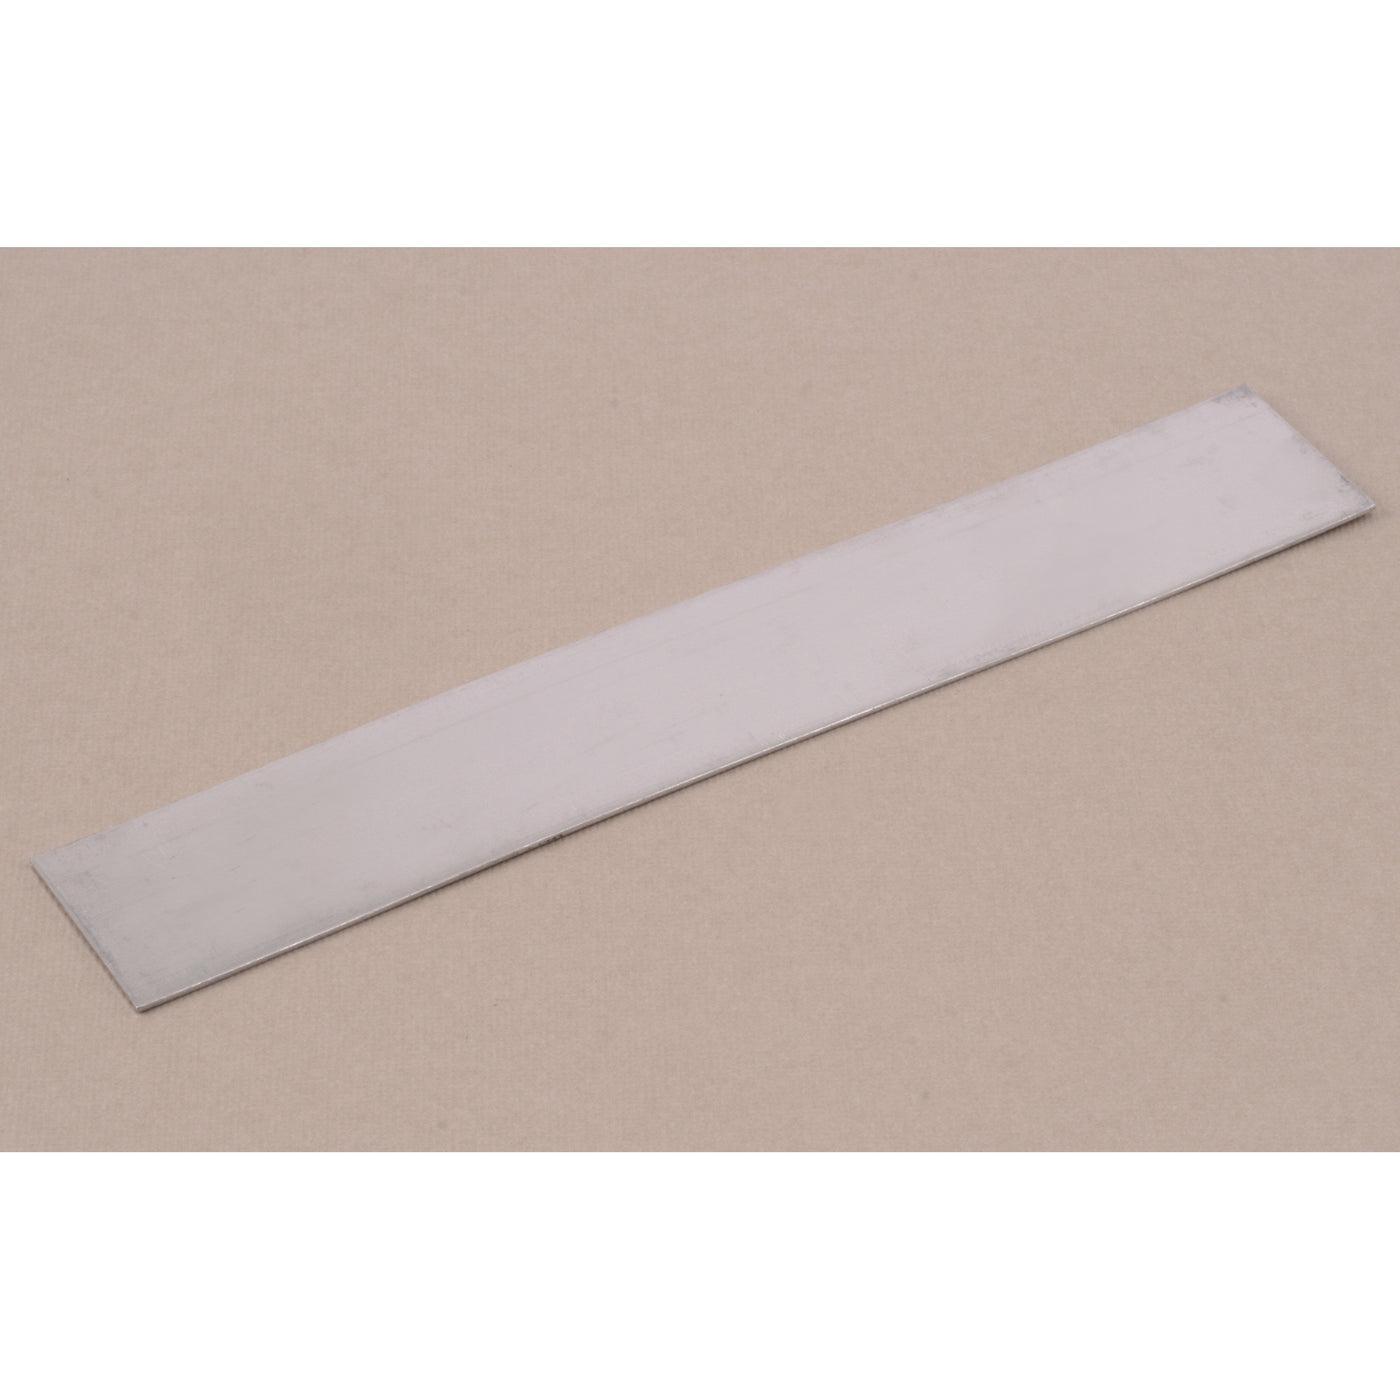 Aluminum Strip or Bookmark Blank, 152mm (6) x 25.4mm (1), 20